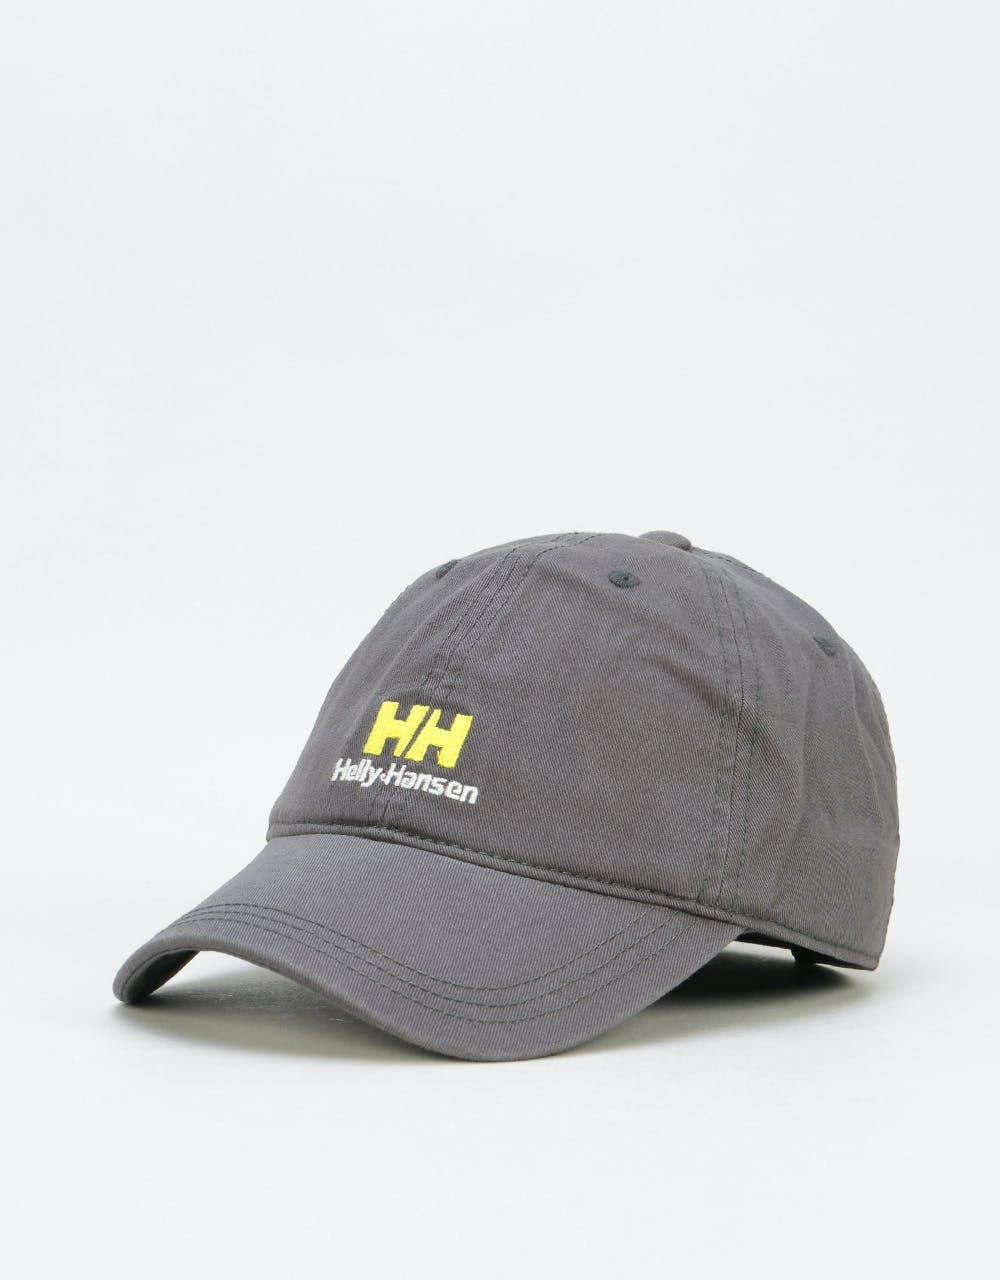 Helly Hansen Logo Dad Cap - Charcoal